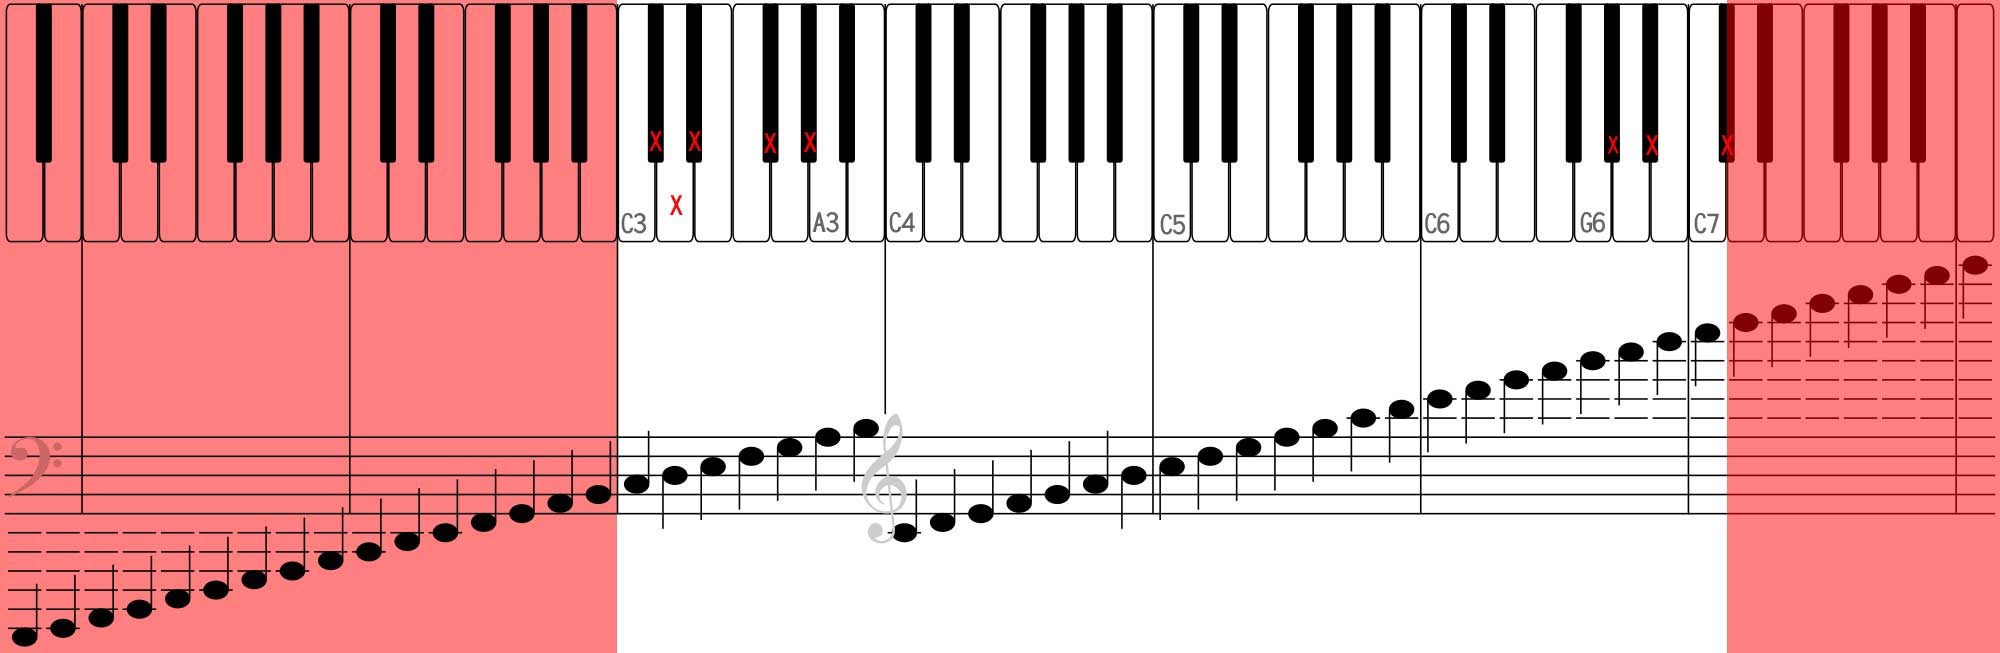 keyboard,concertina,notation,scale,RT[eB[i,